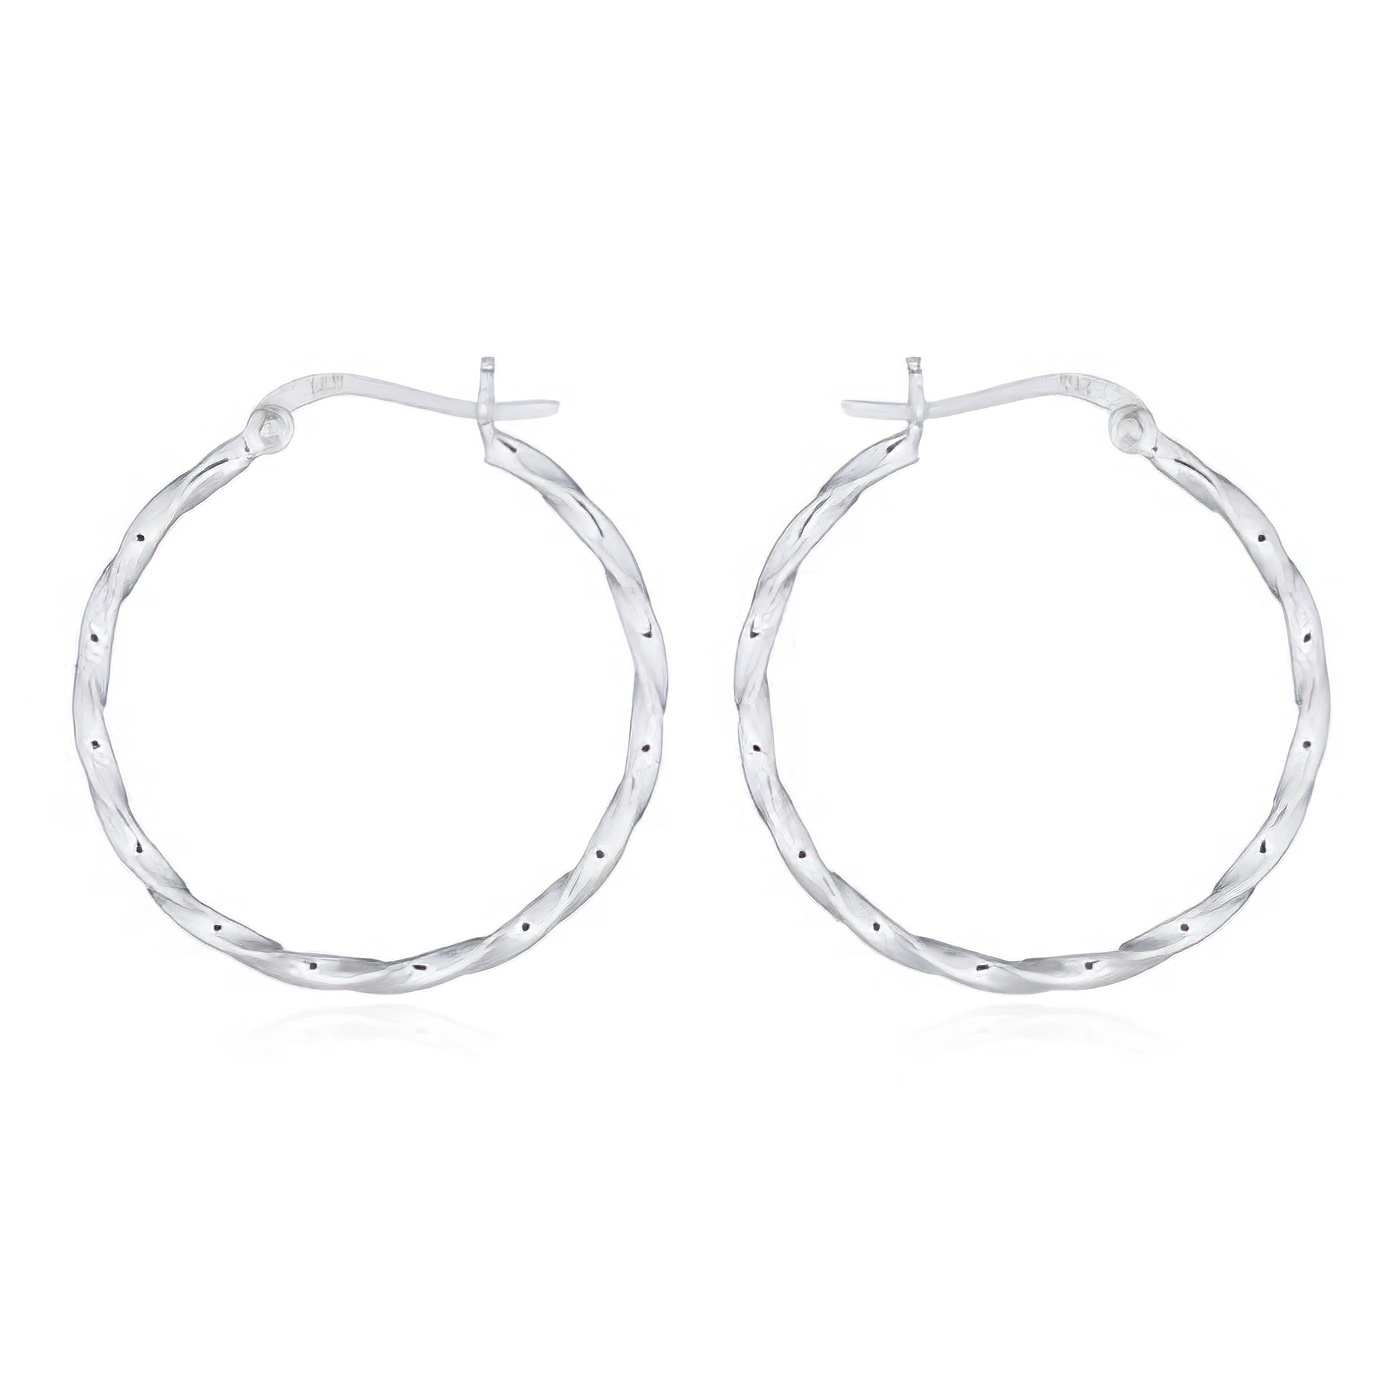 30 mm Sterling Silver Twisted Wire Hoop Earrings by BeYindi 